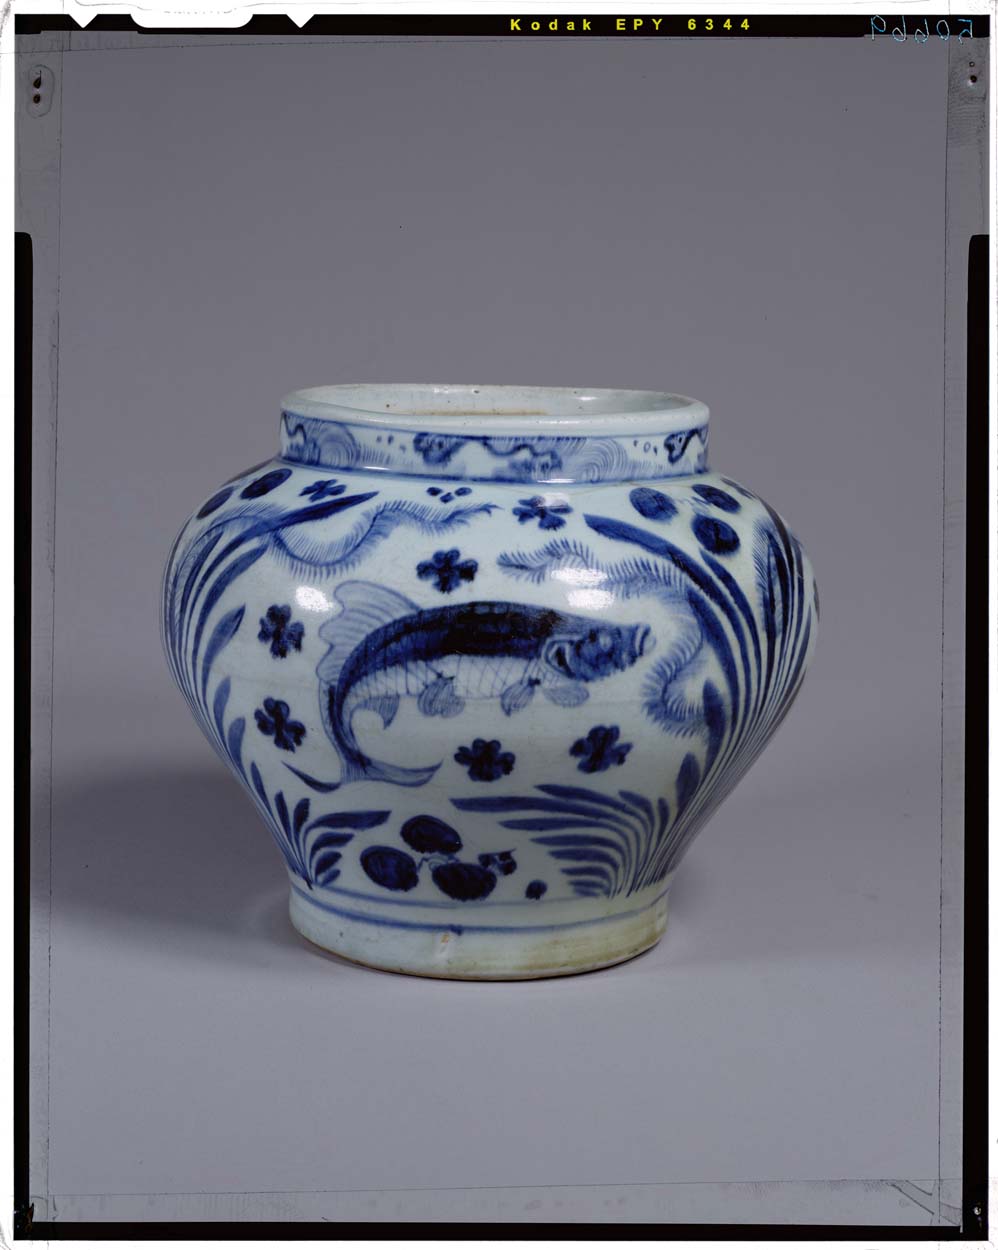 C0050669 青花魚藻文壷 - 東京国立博物館 画像検索